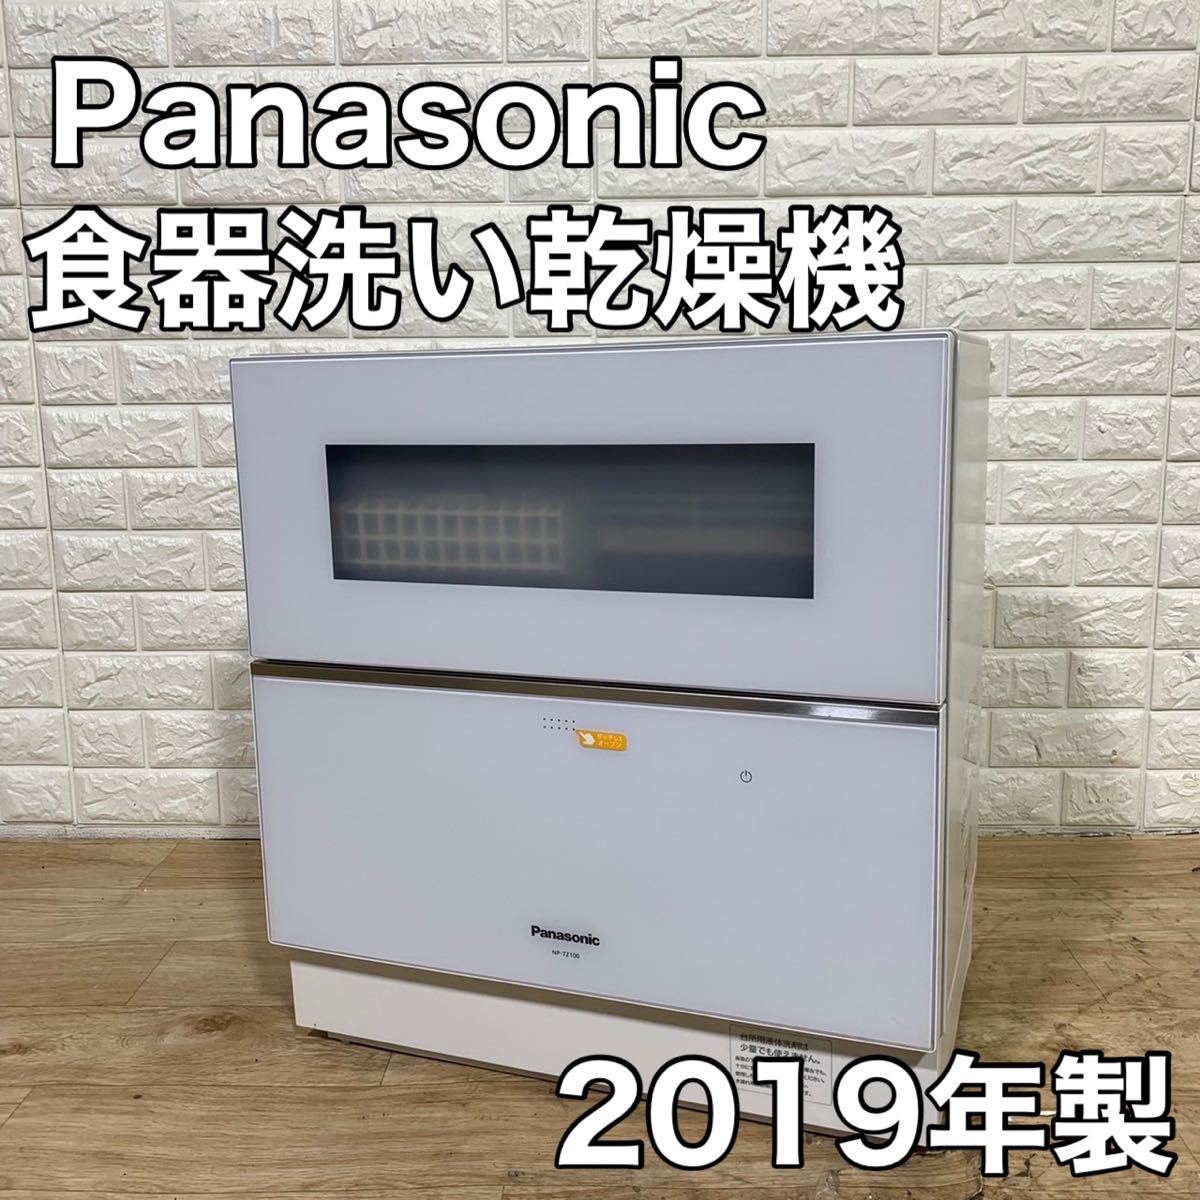 Modernize Concise Premise 食器乾燥機panasonic - hongyoku.jp